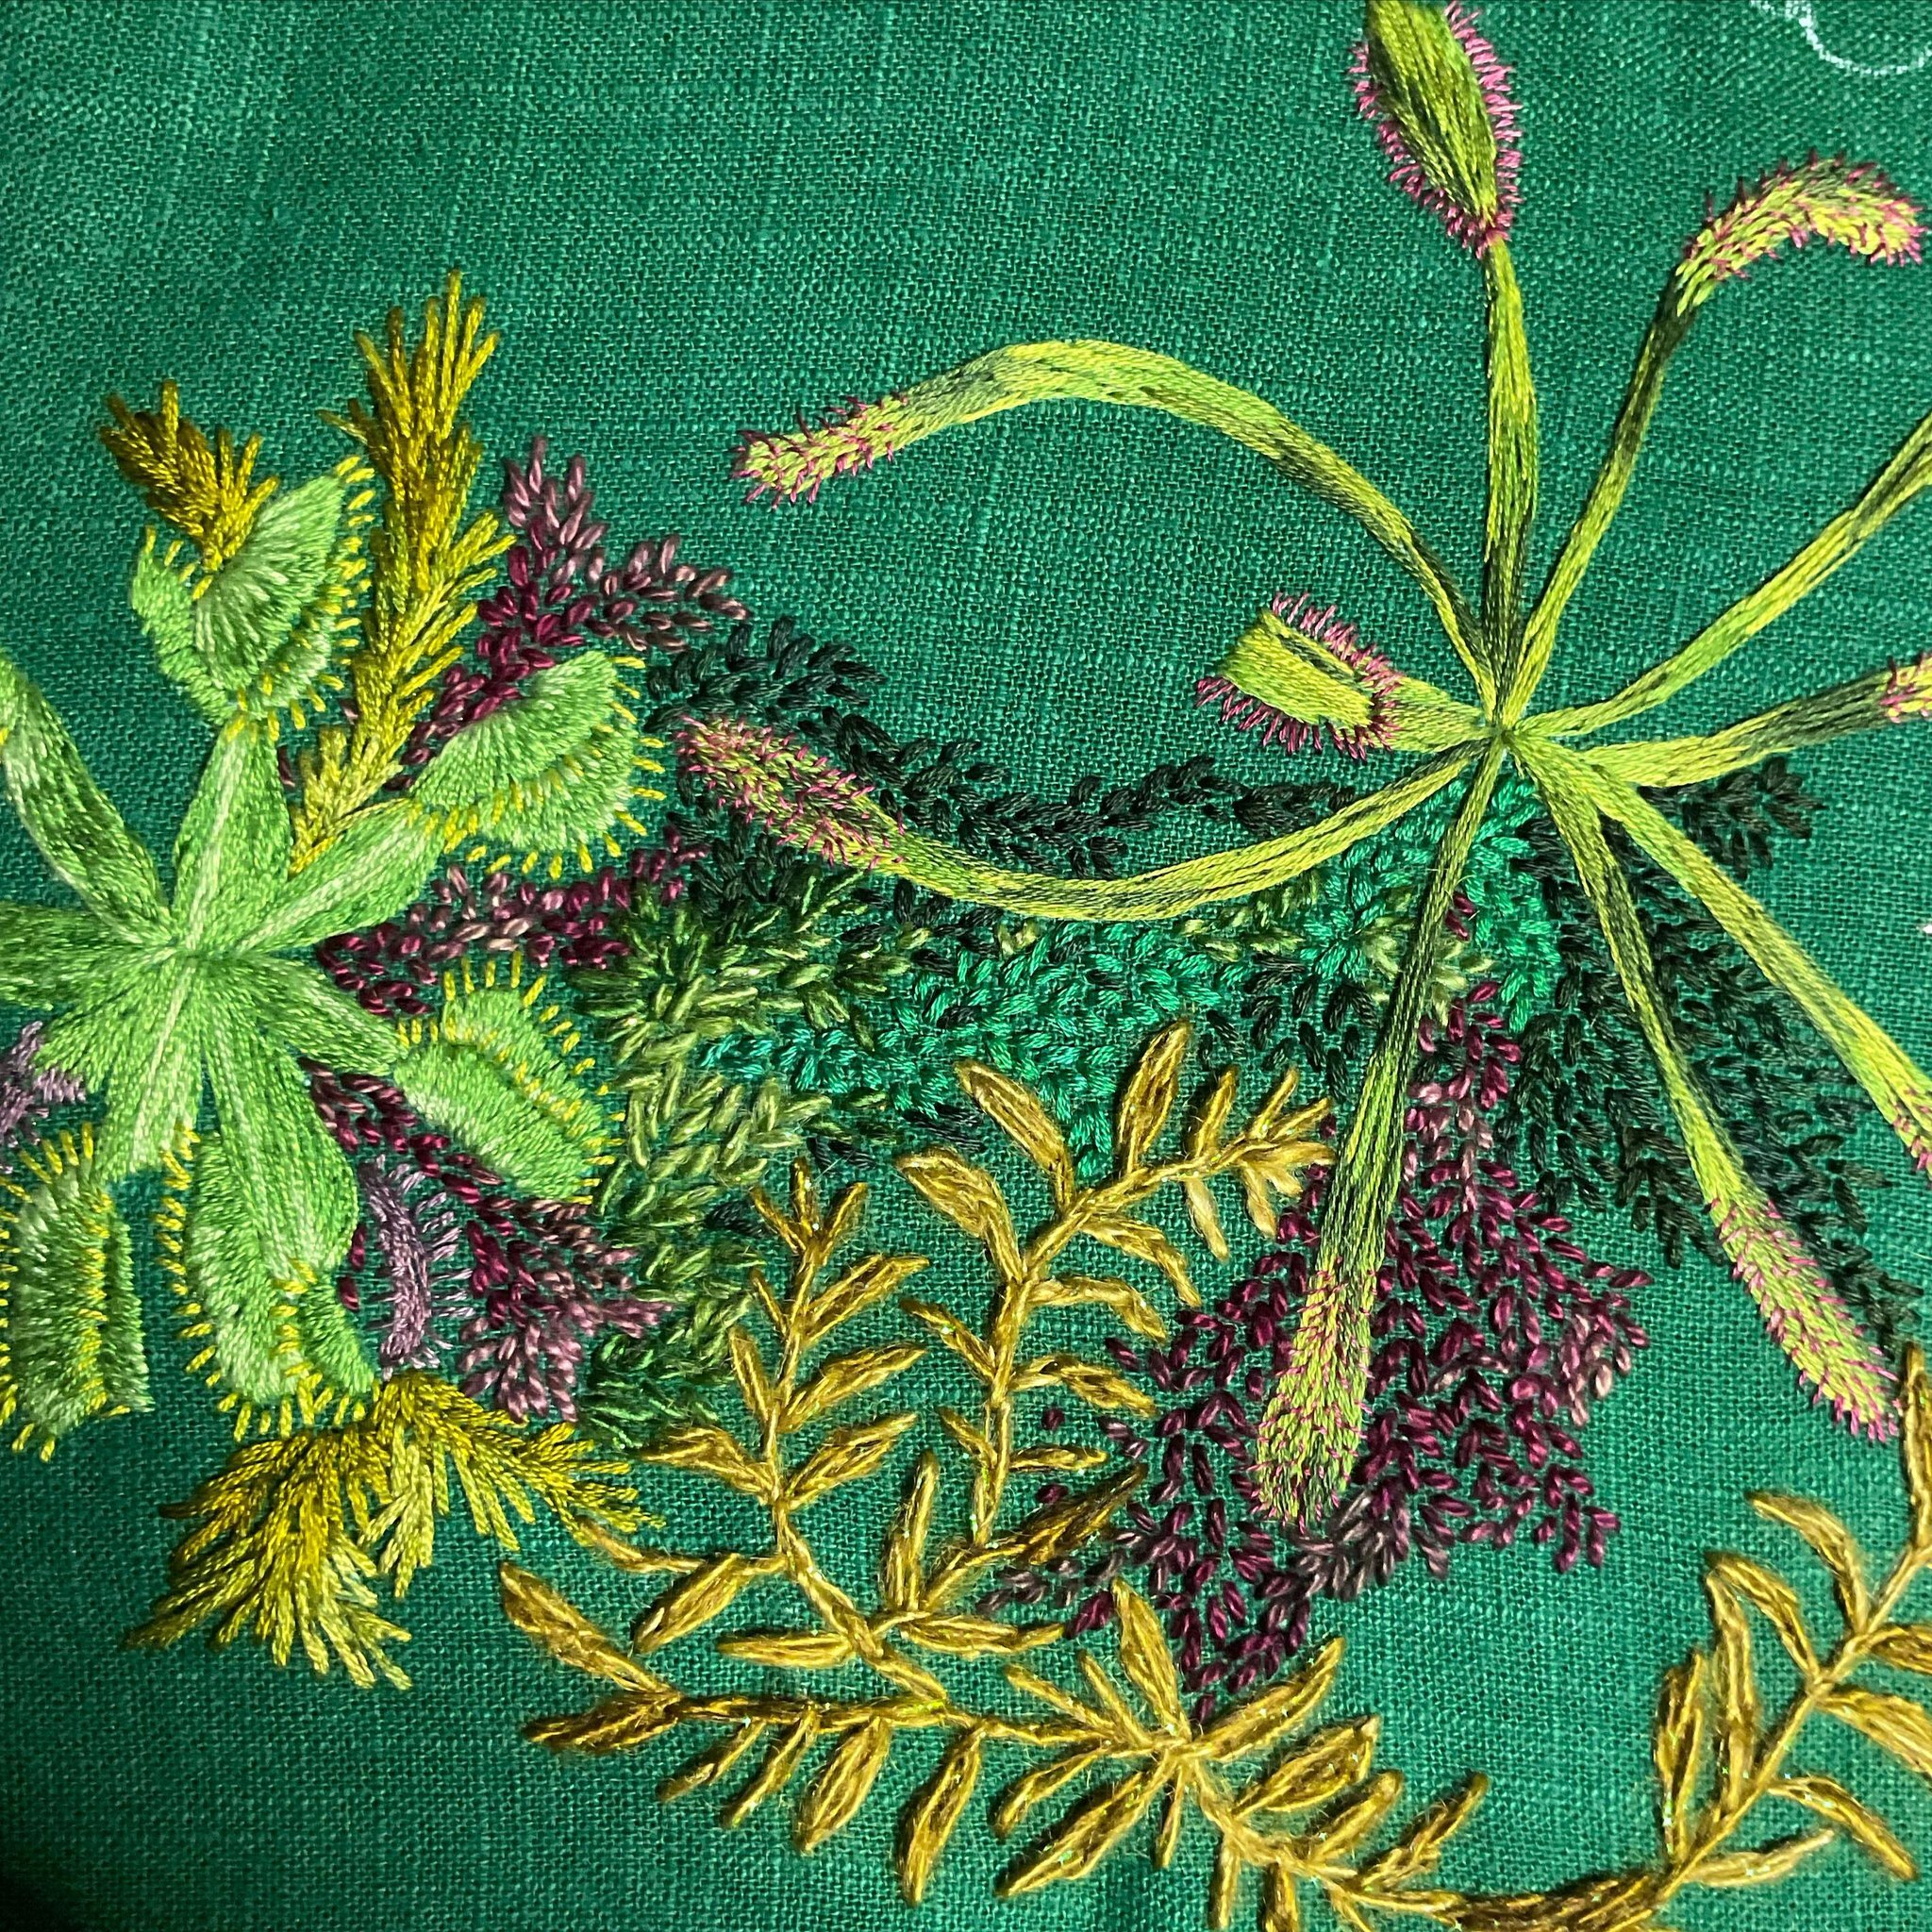 Evening stitching&hellip; another carnivorous plant #carnivourousplant #venusflytrap #botanicalart #botanicalgardens #embroidery #textileart